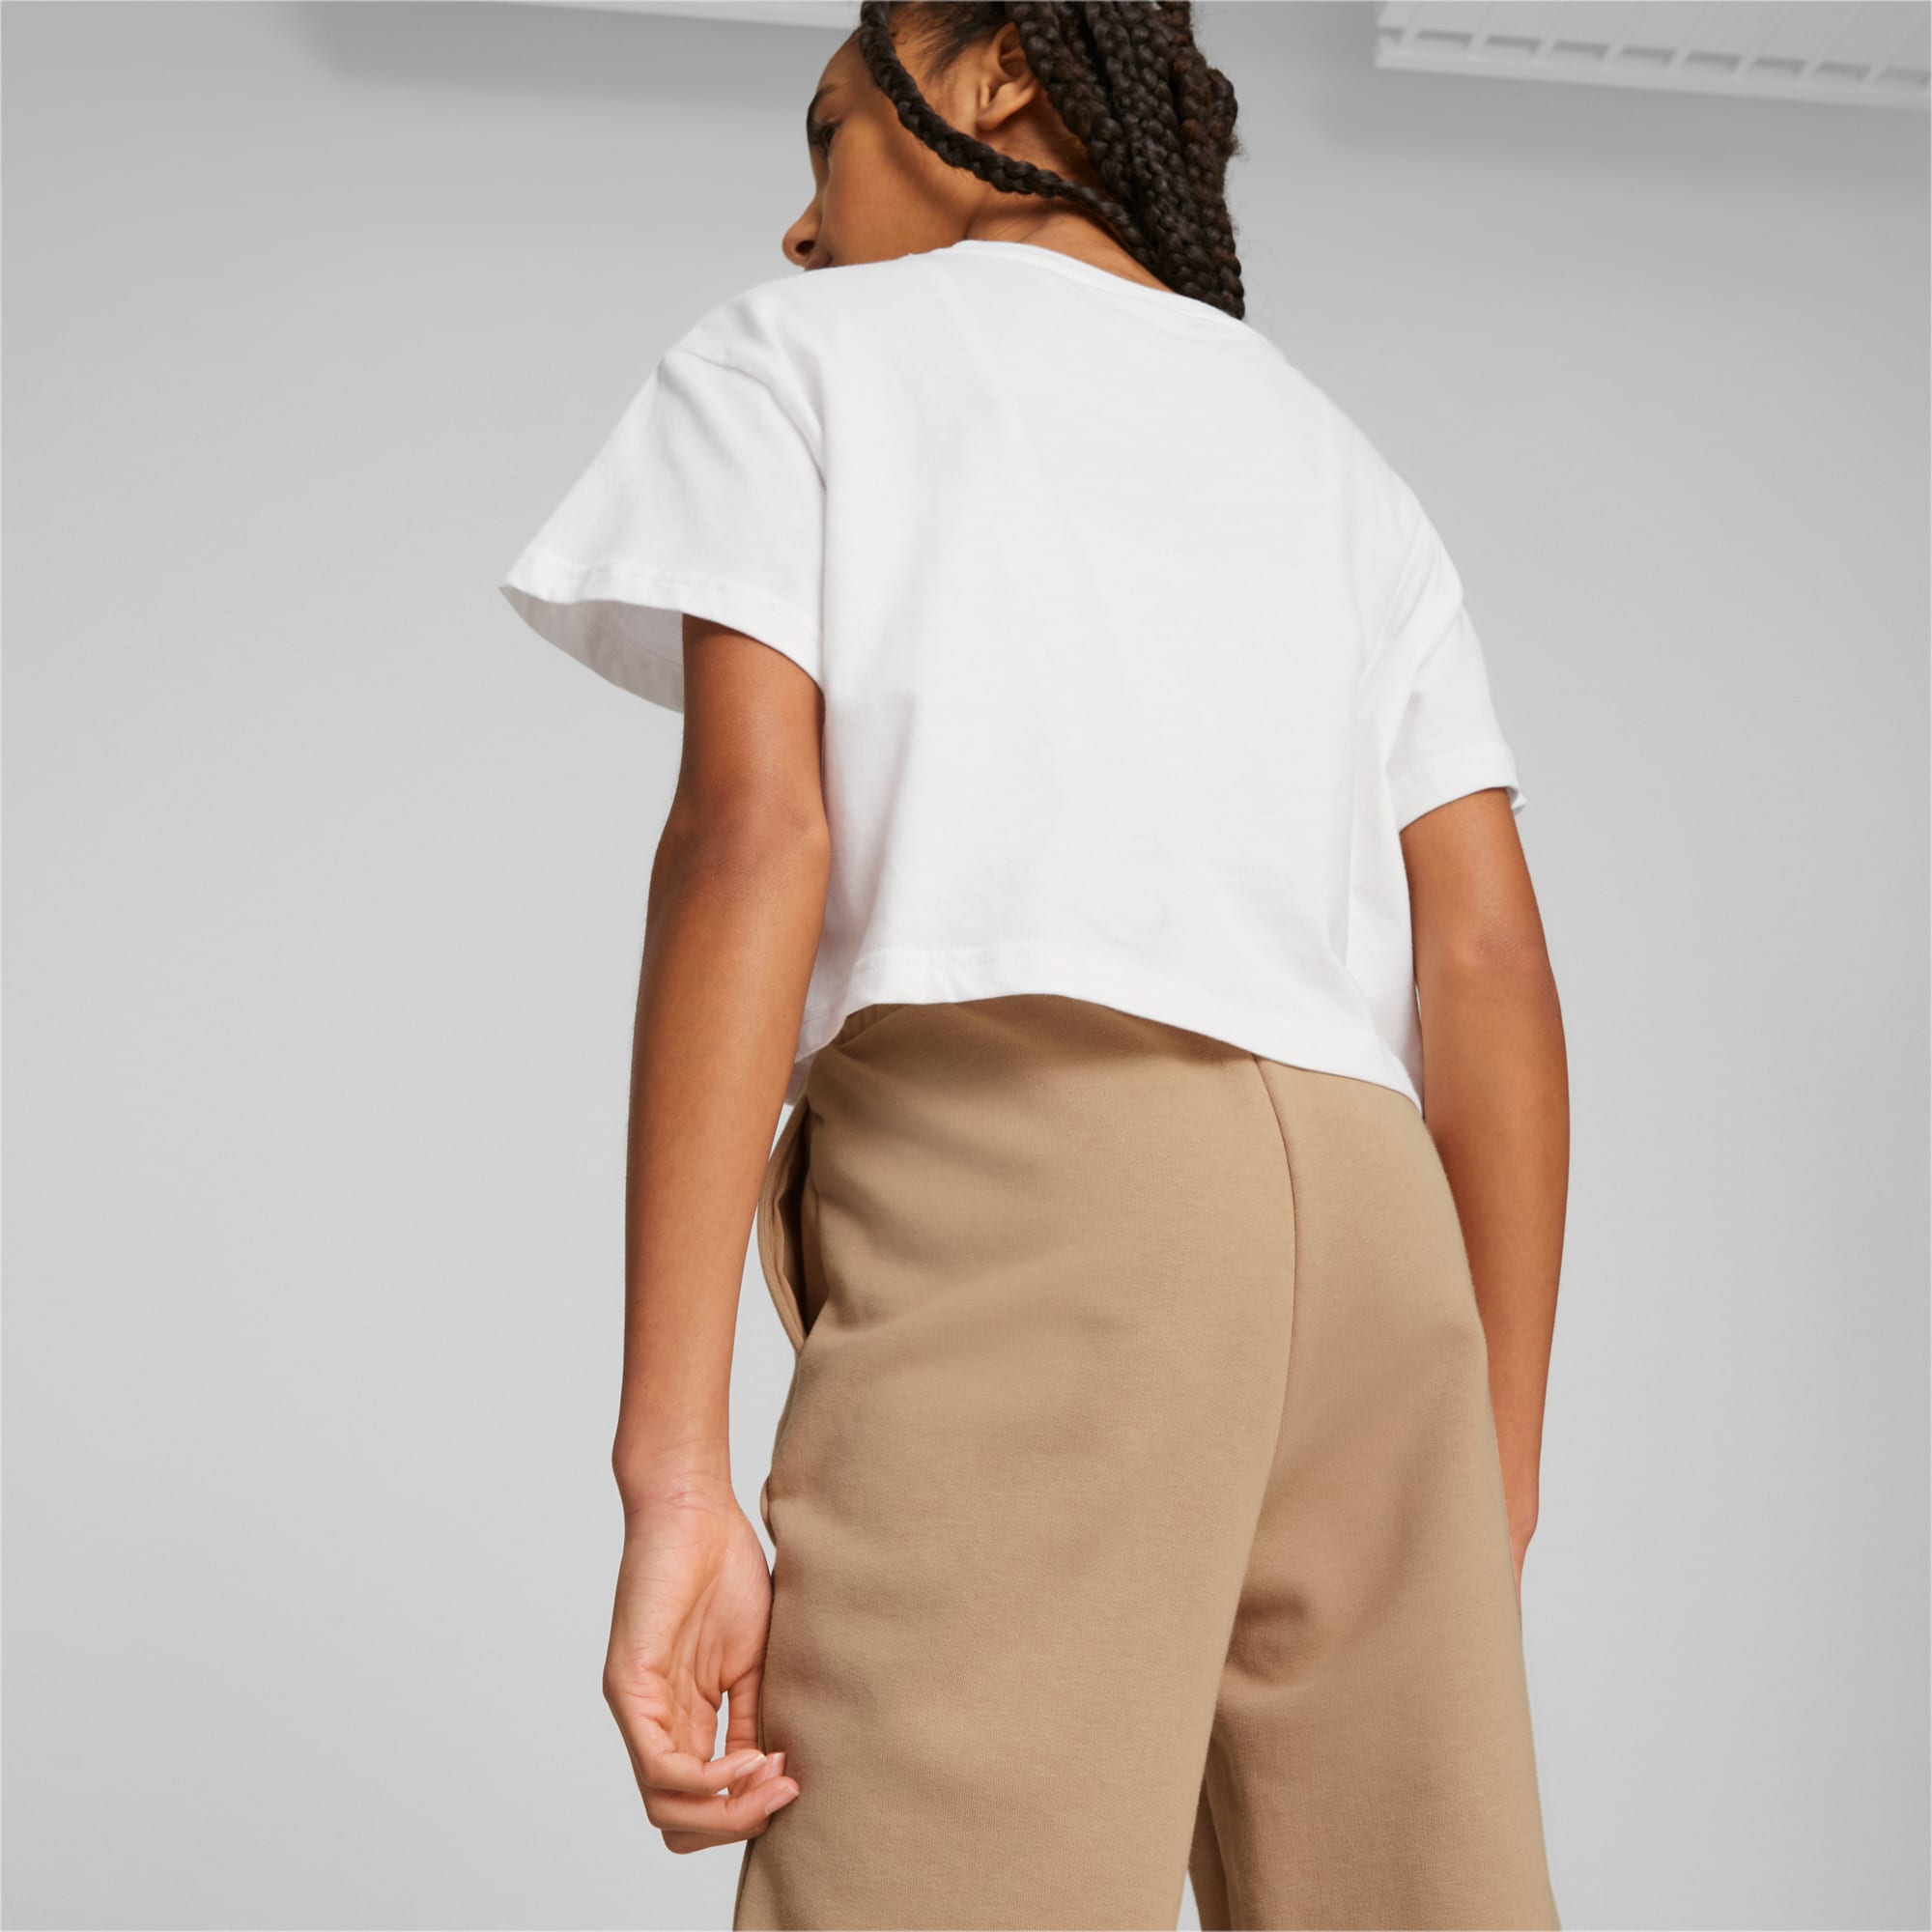 PUMA Classics T-Shirt Jugend Für Kinder, Weiß, Größe: 140, Kleidung